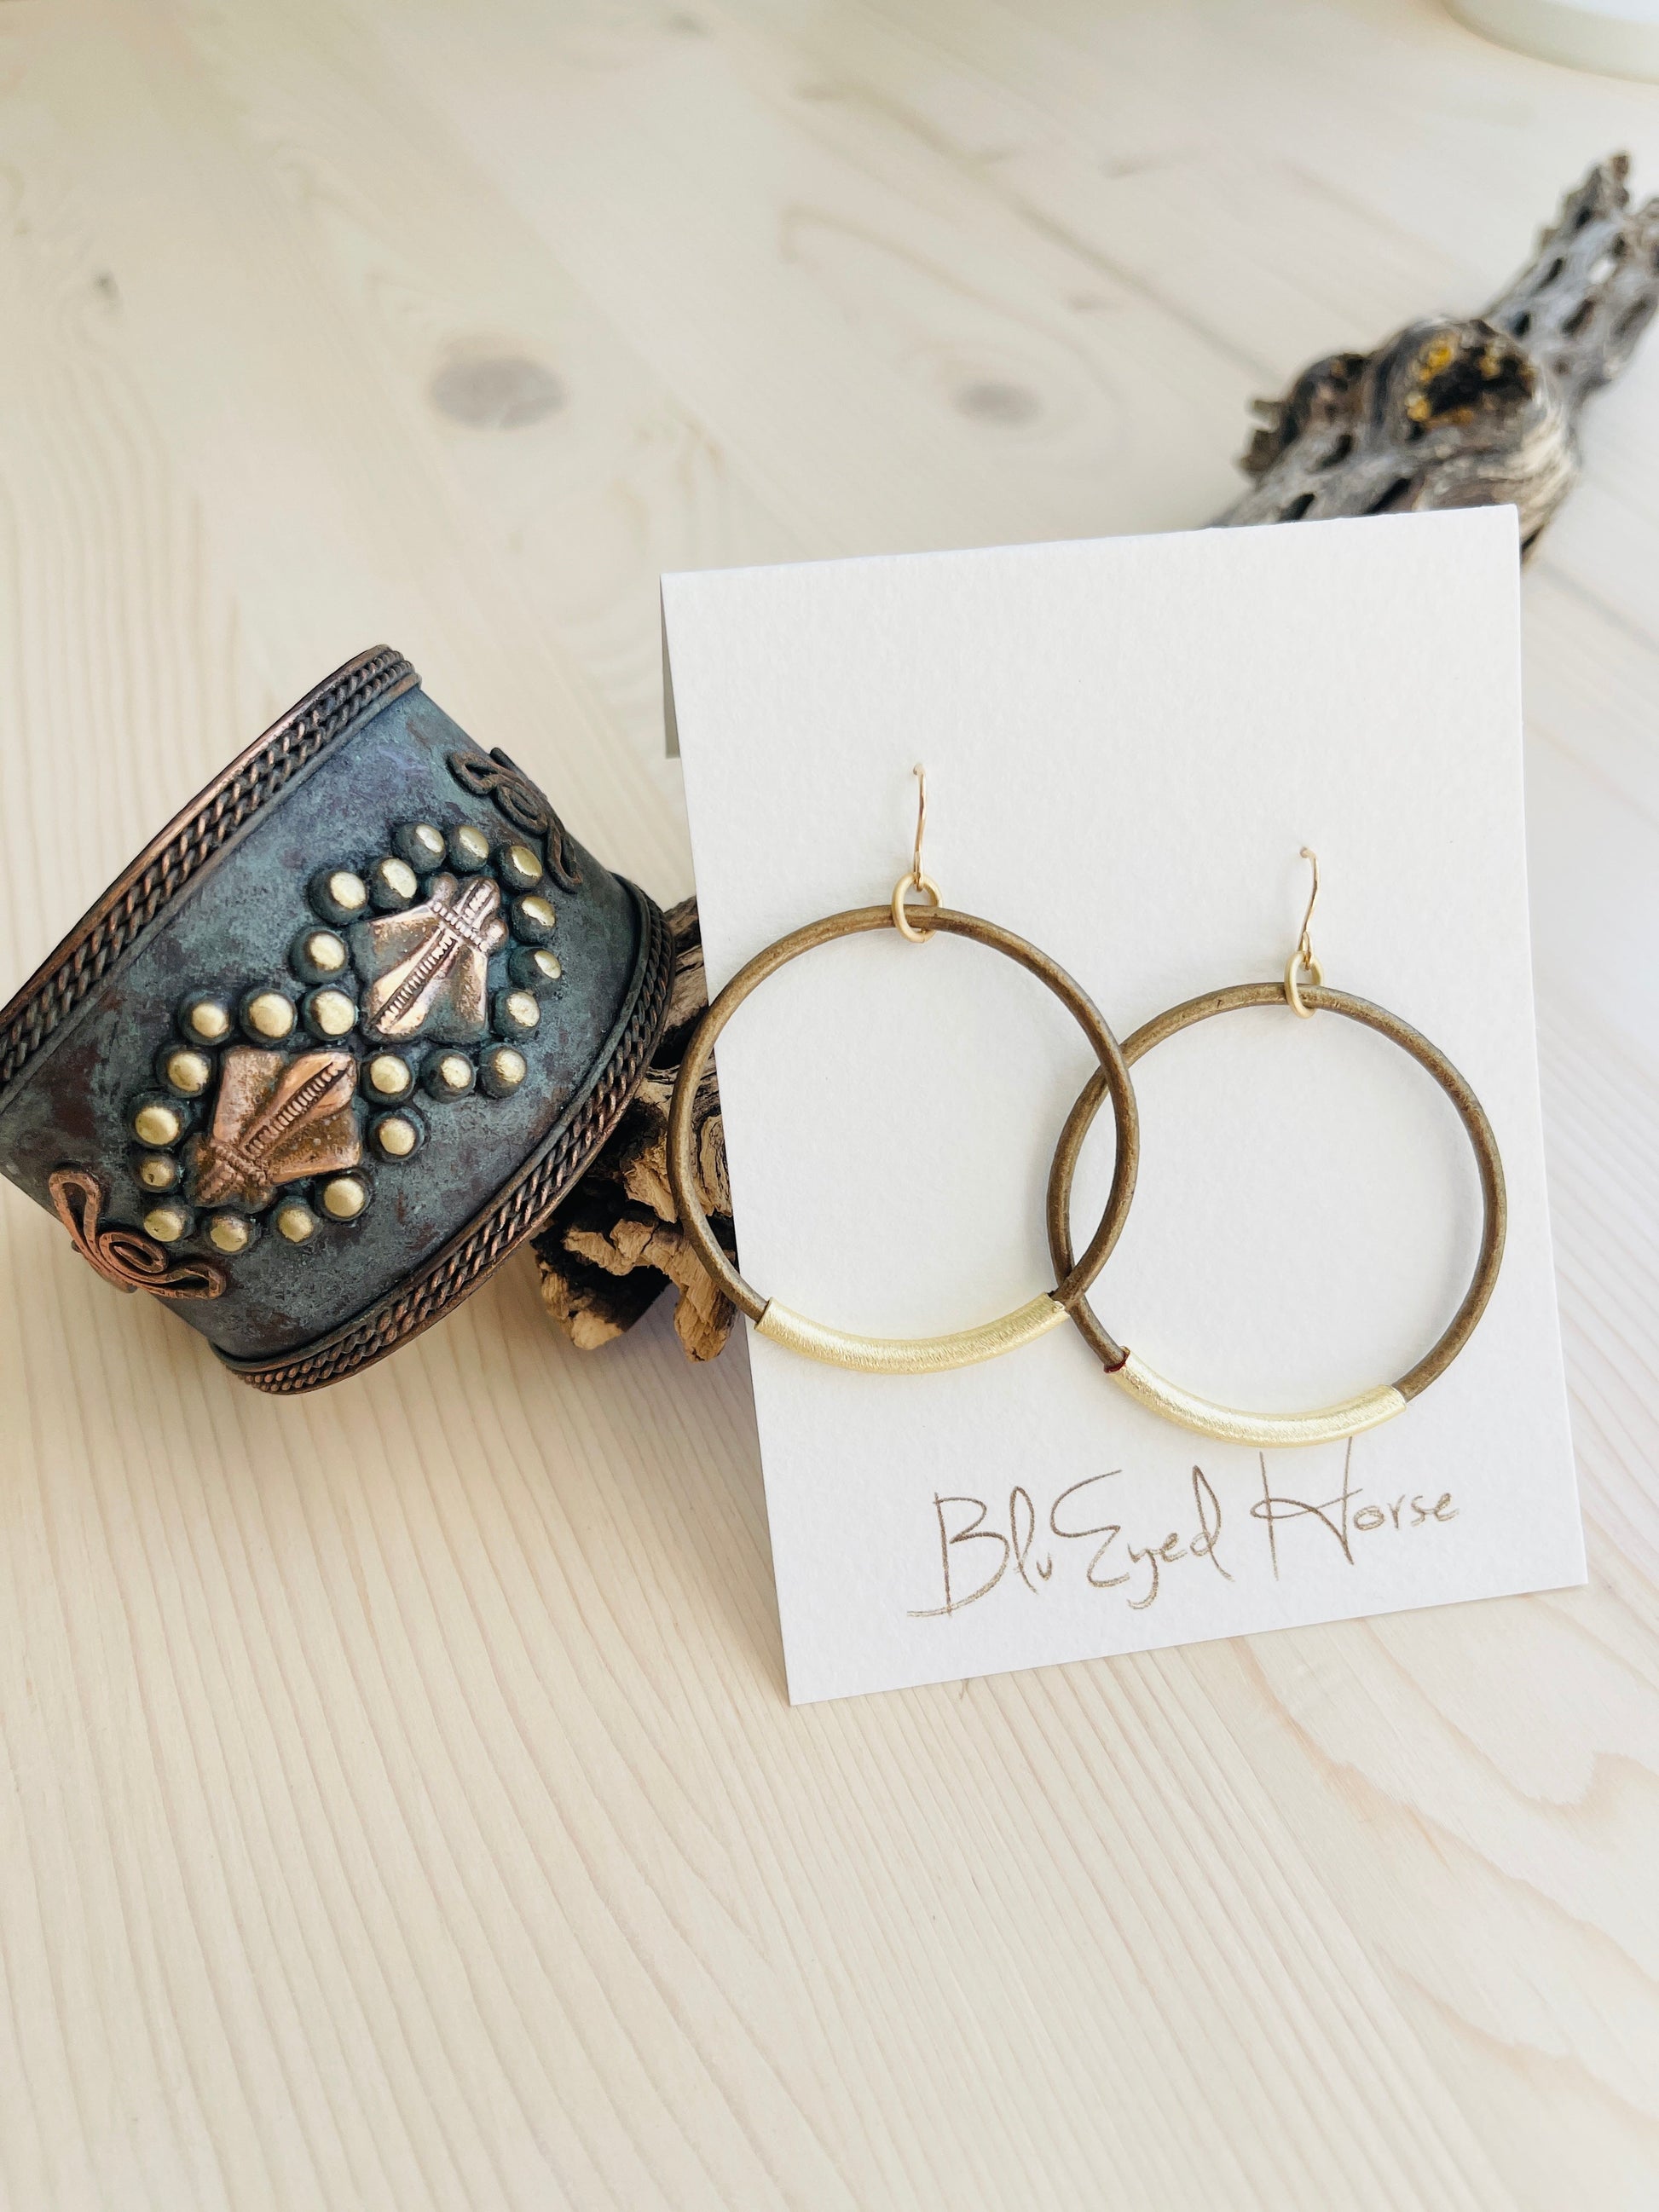 Handmade copper bracelet-cuff and ear rings